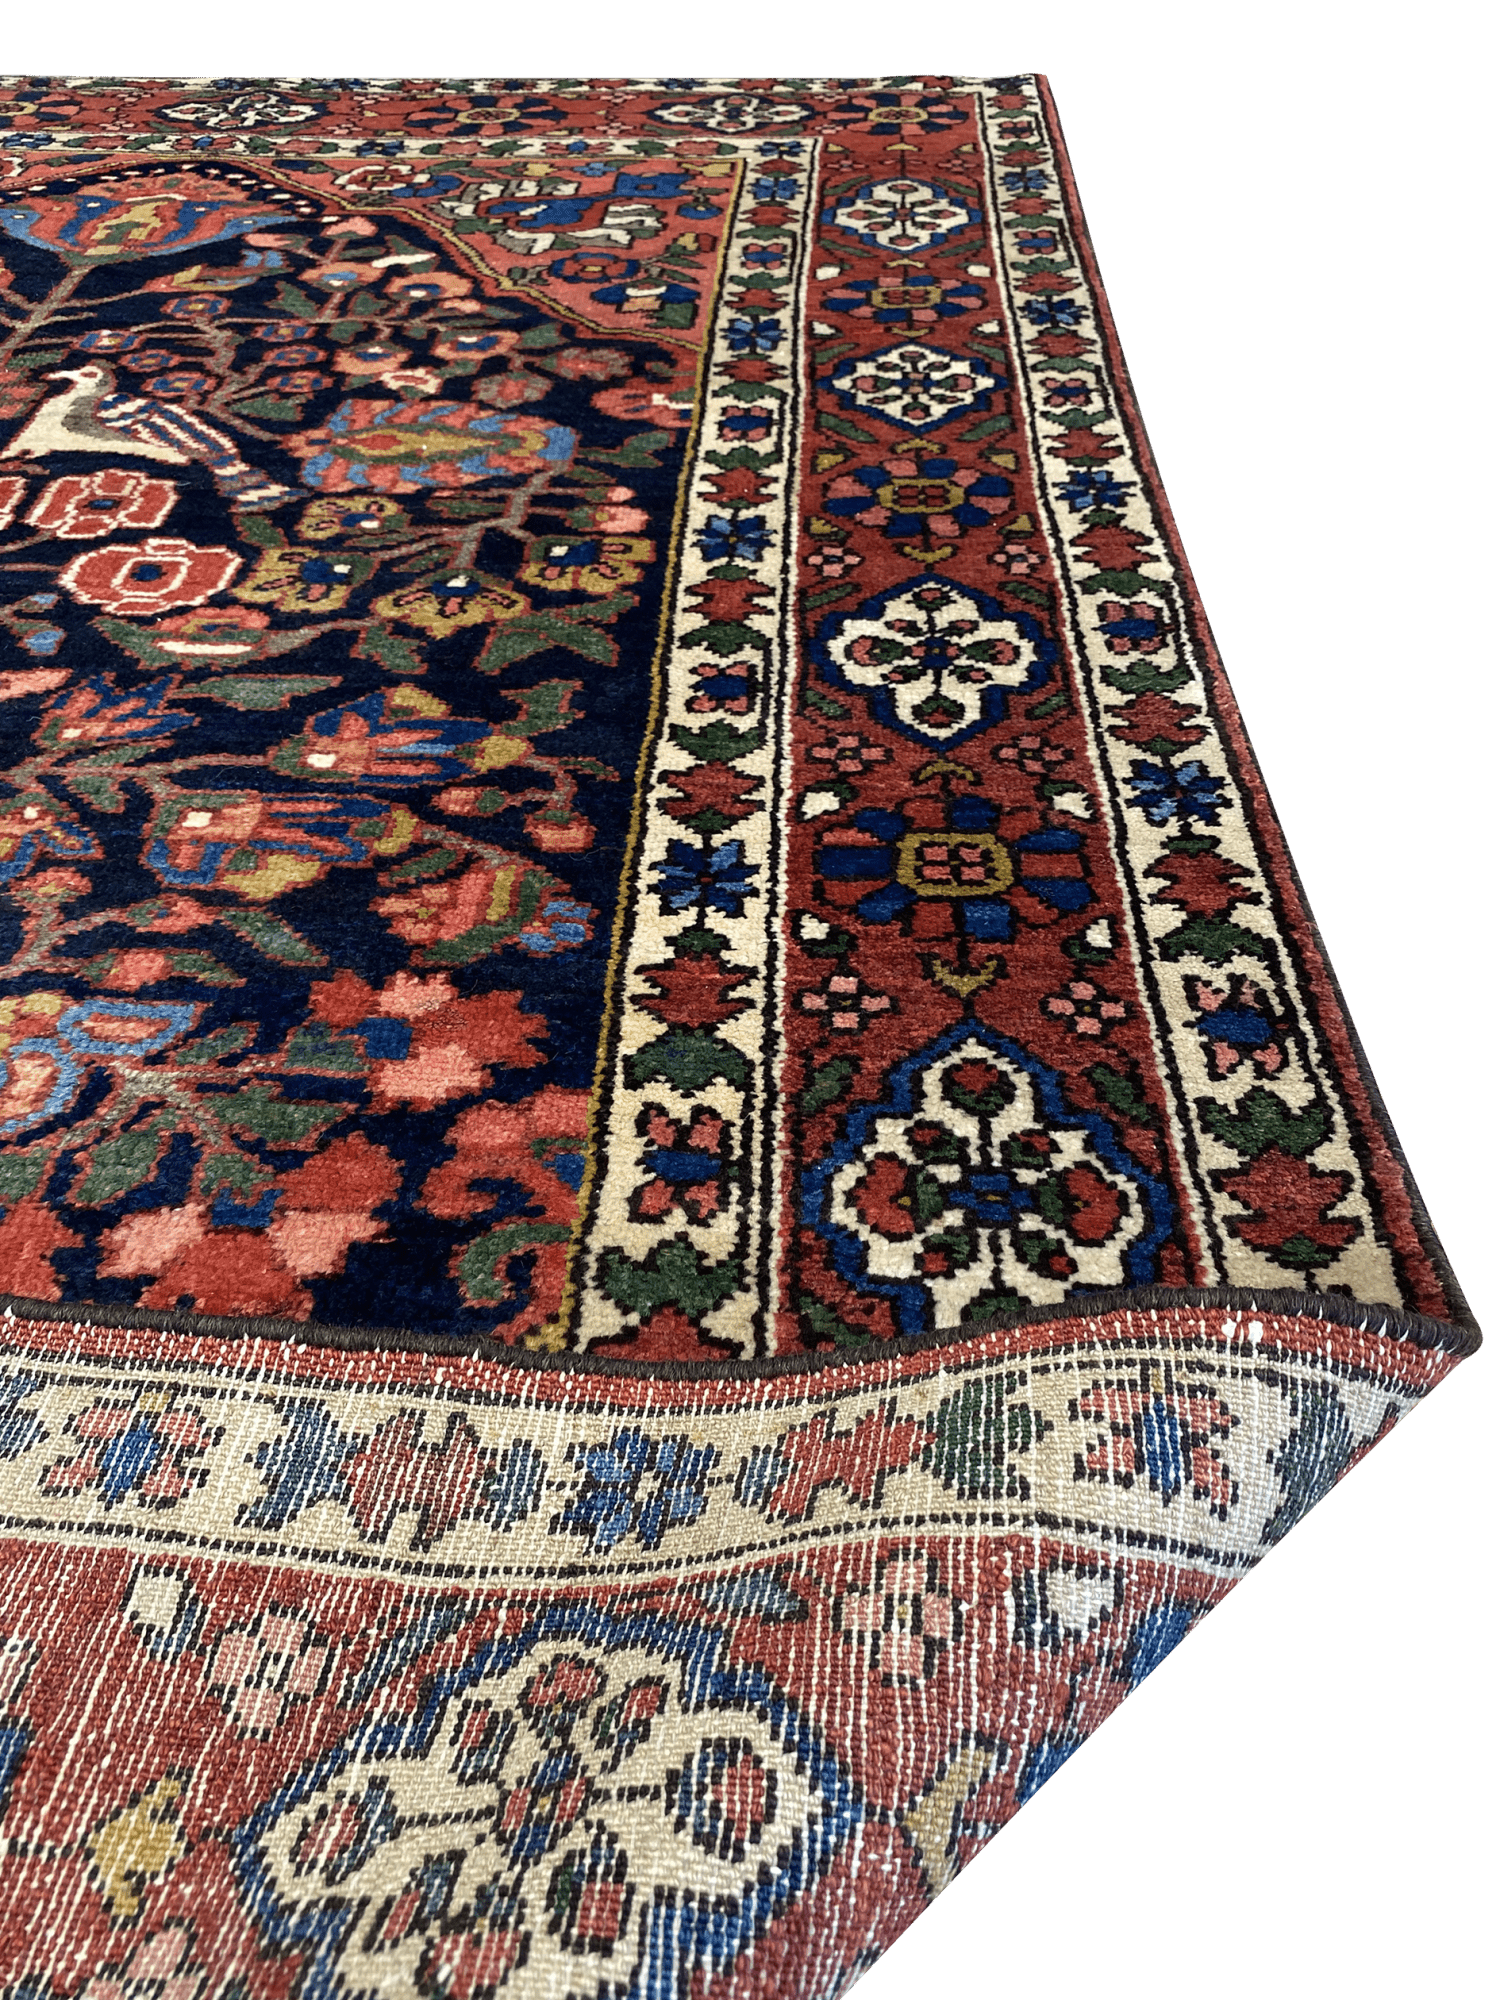 Antique Persian Bakhtiari 4' 10" x 6' 10" Handmade Wool Area Rug - Shabahang Royal Carpet